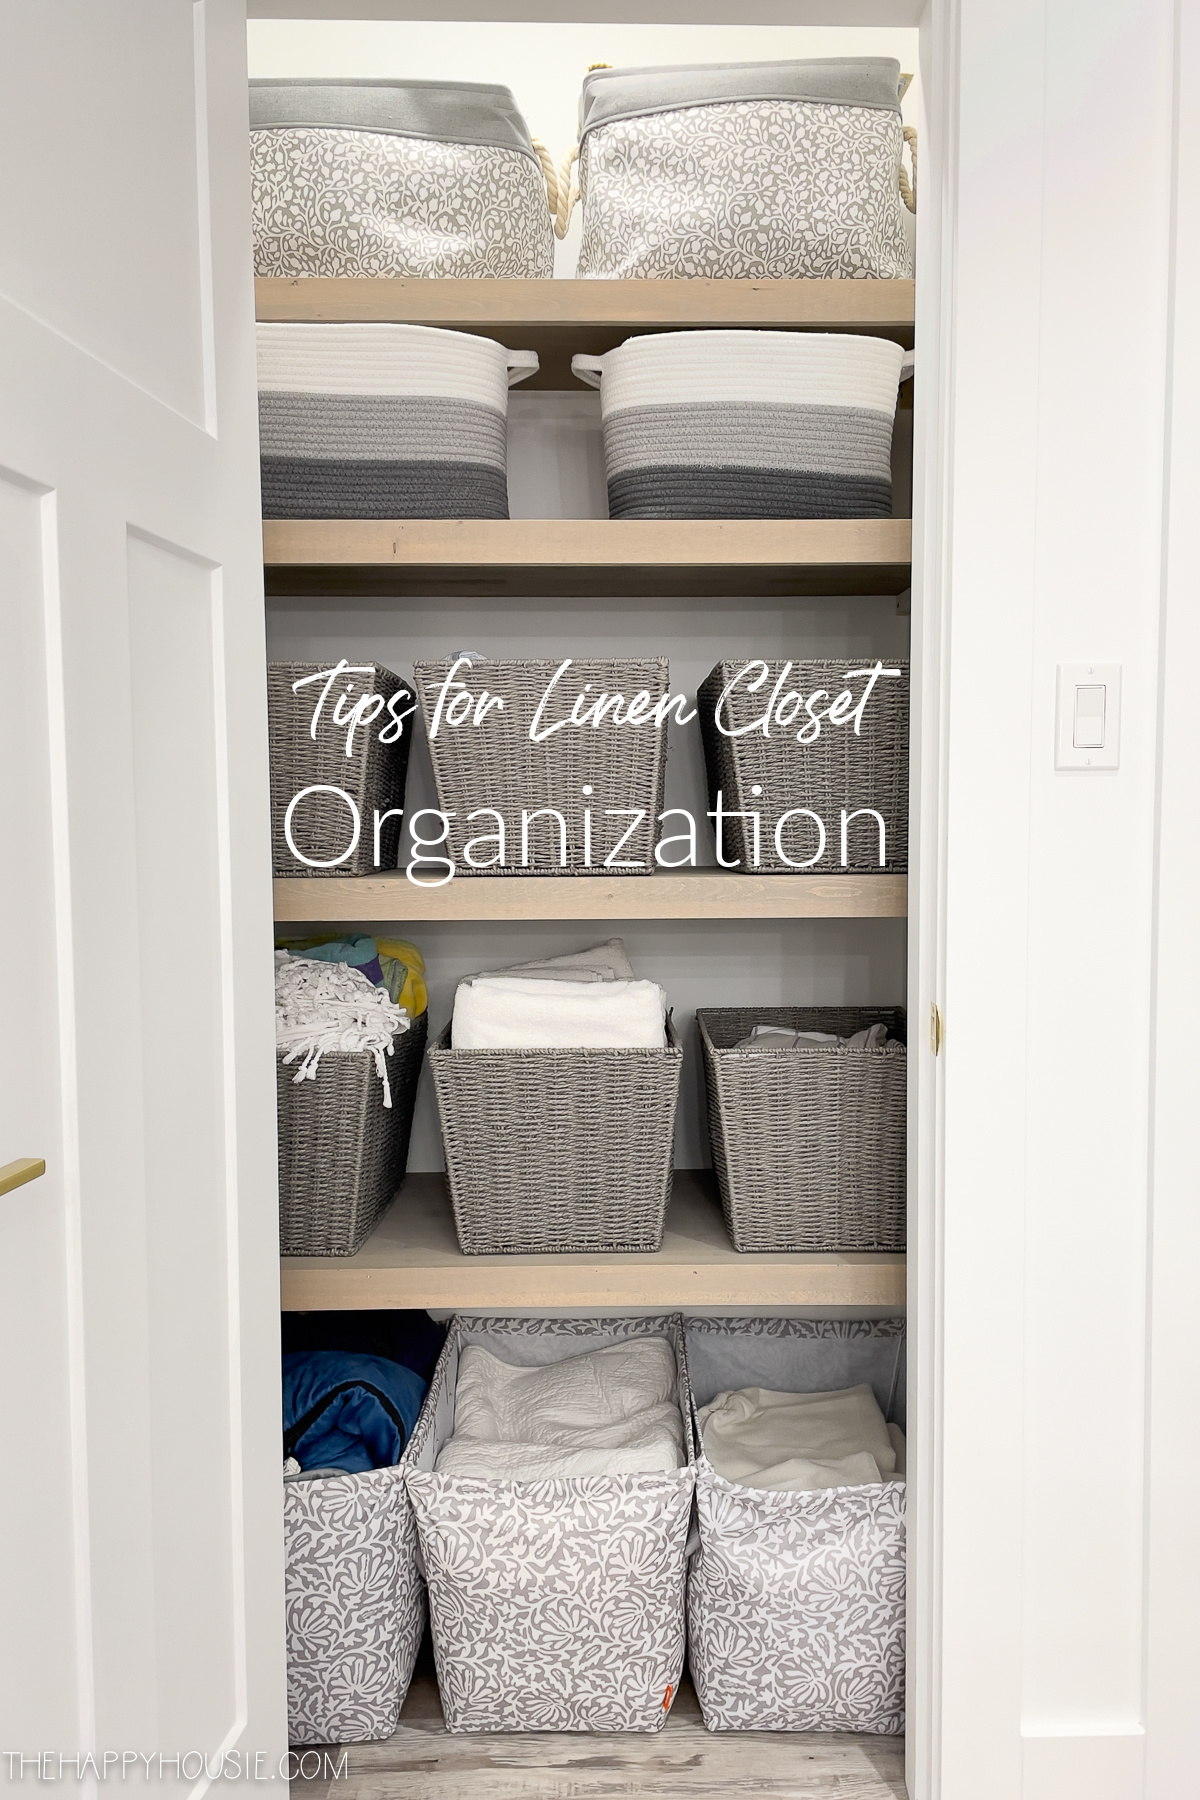 Tips For Linen Closet Organization poster.